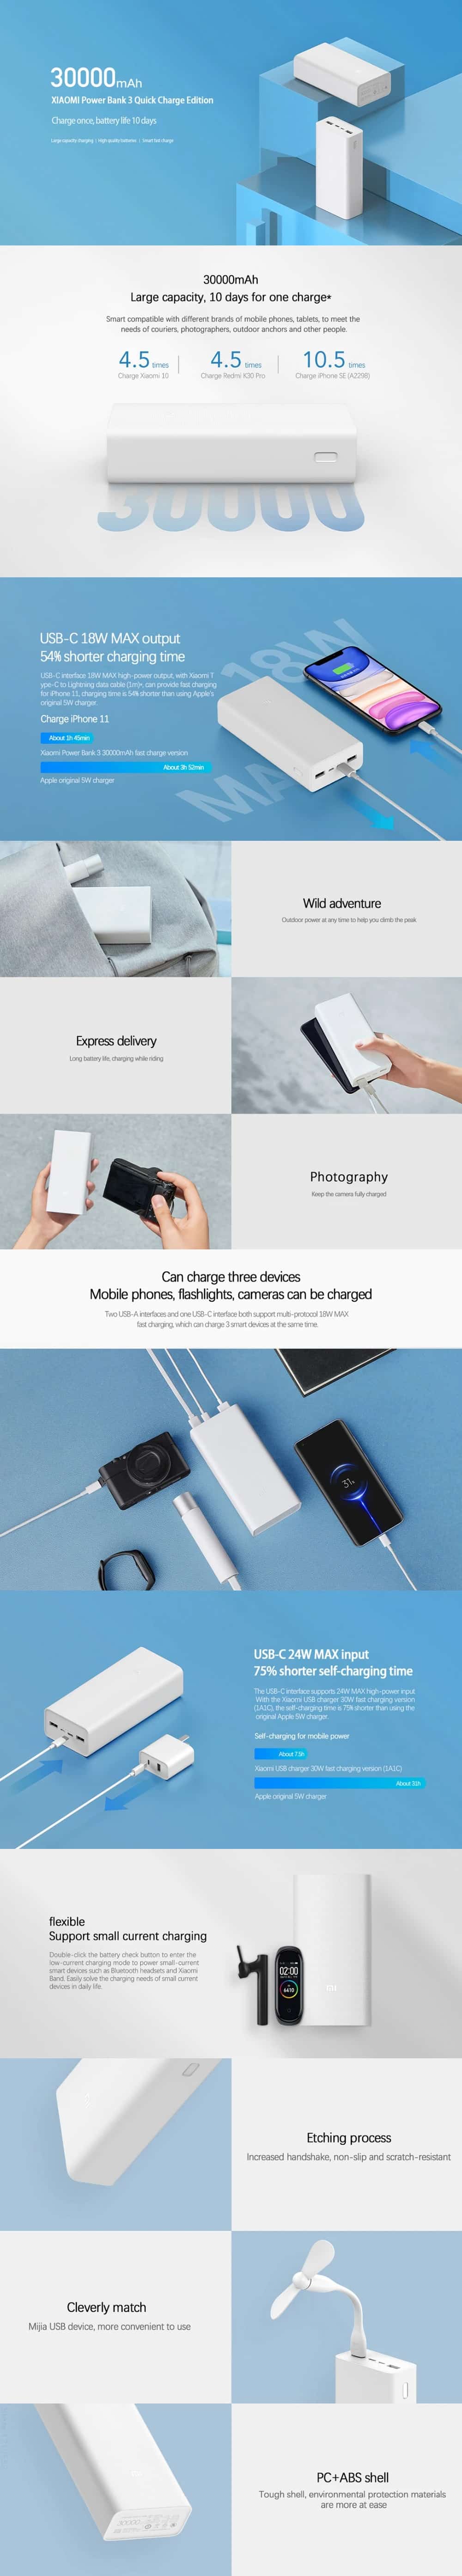 Xiaomi Mi 30000mAh 3 USB C 18W Power Bank – White 5